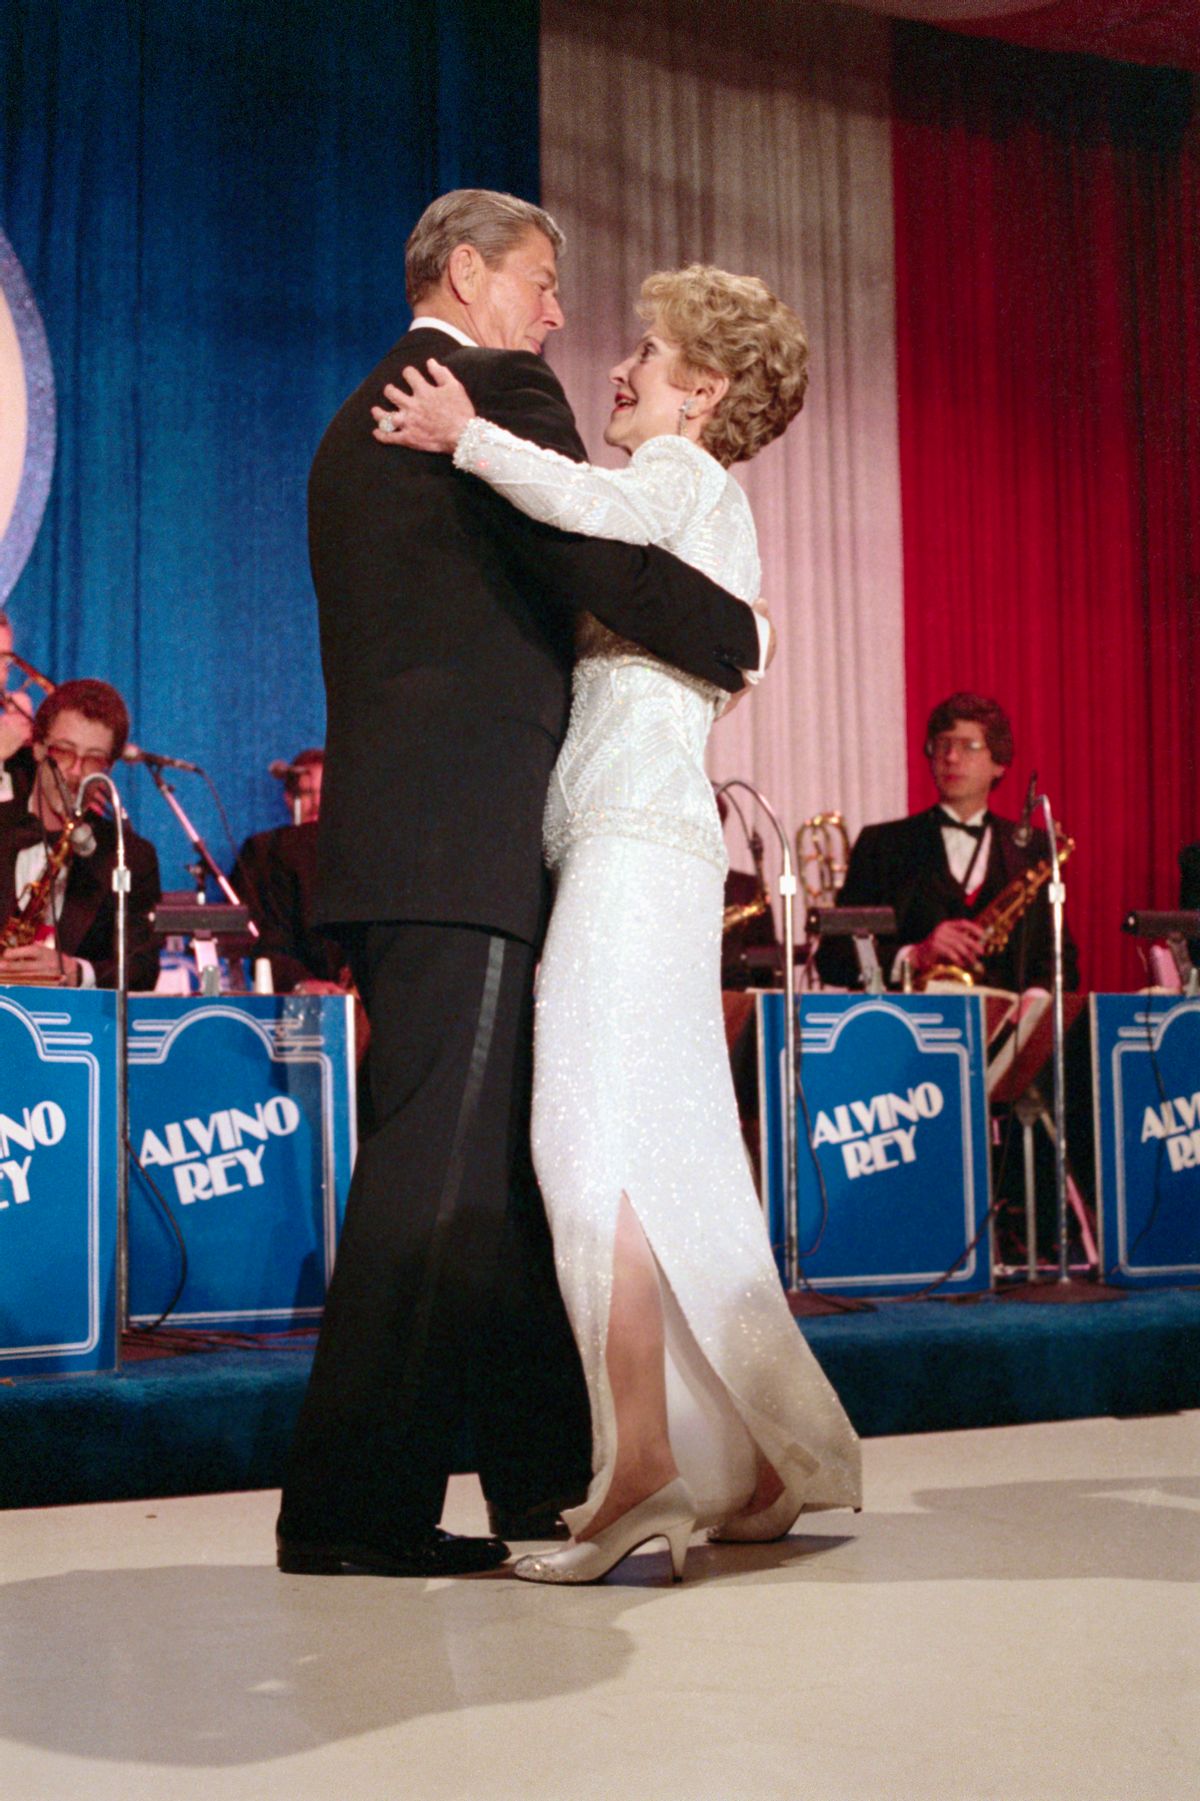 (Original Caption) President and Mrs. Reagan enjoy a dance at the Inaugural Ball at the Sheraton Washington Hotel. (Bettmann / Contributor)